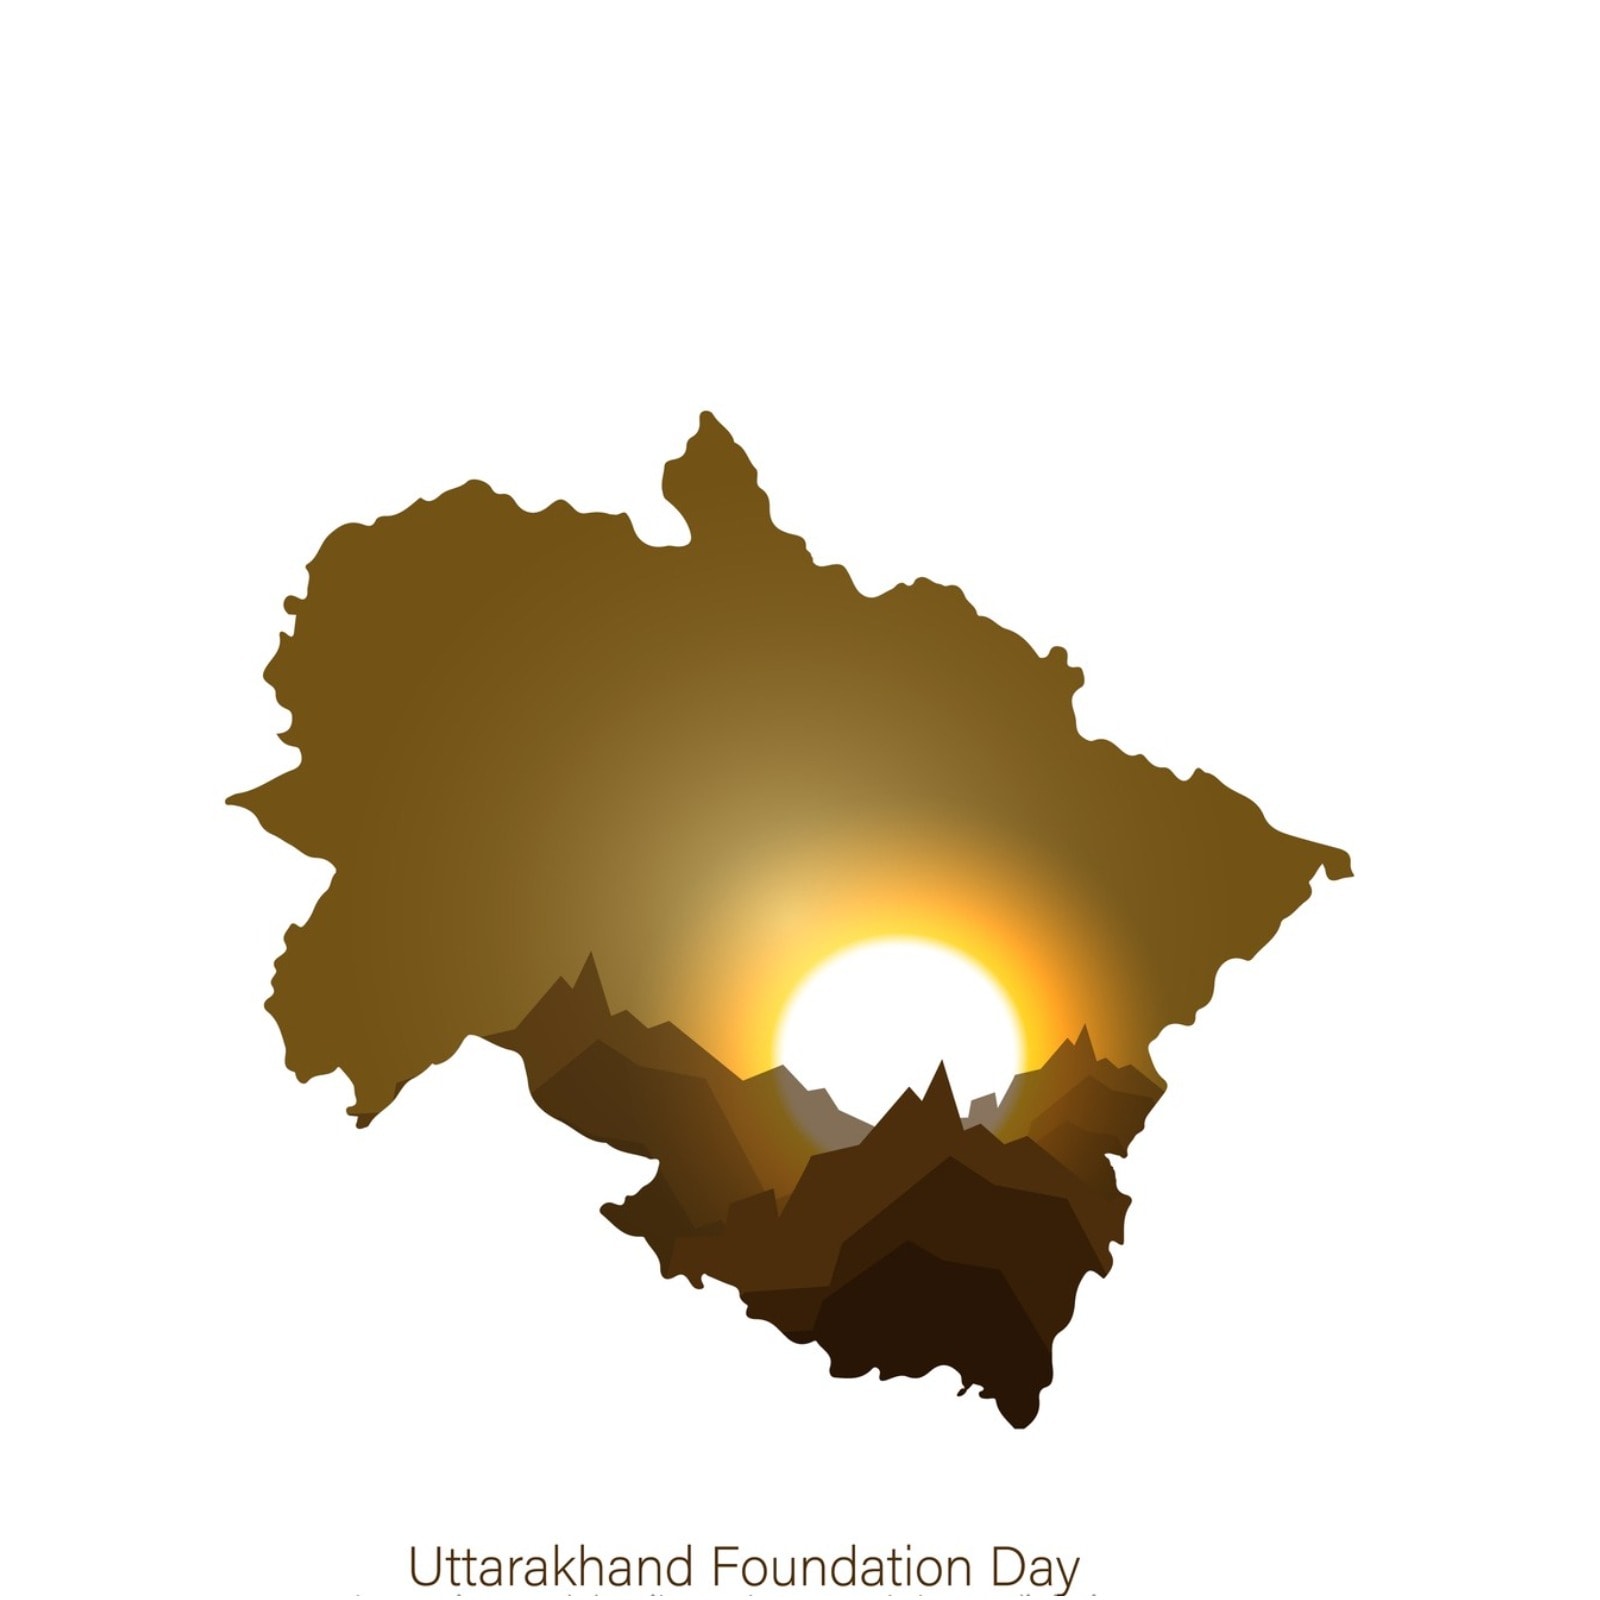 How to draw Uttarakhand Map easy SAAD - YouTube